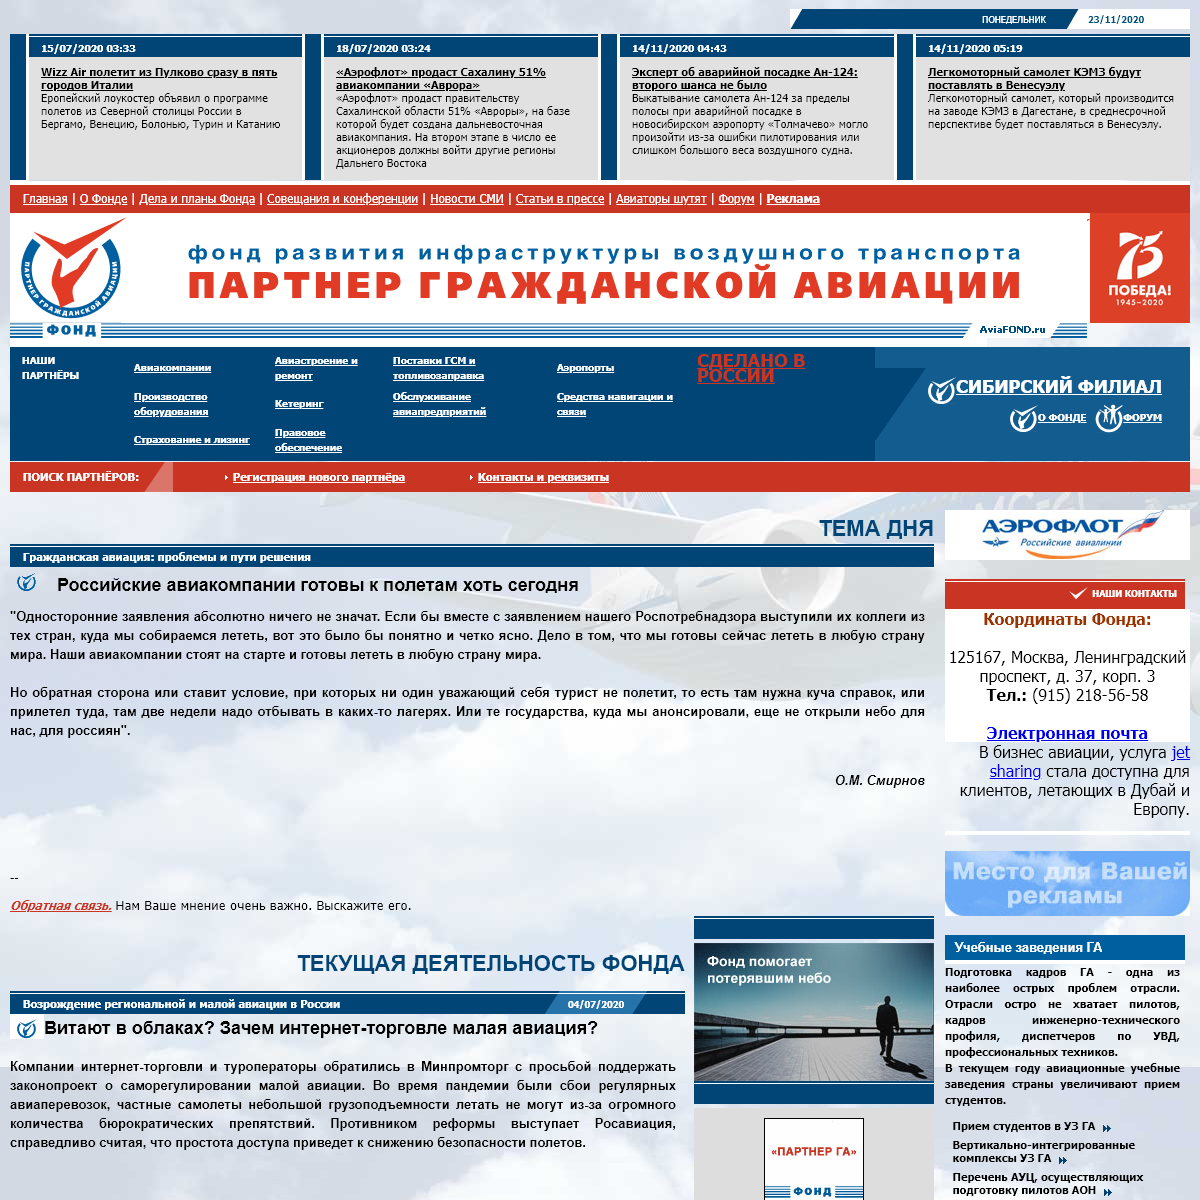 A complete backup of aviafond.ru